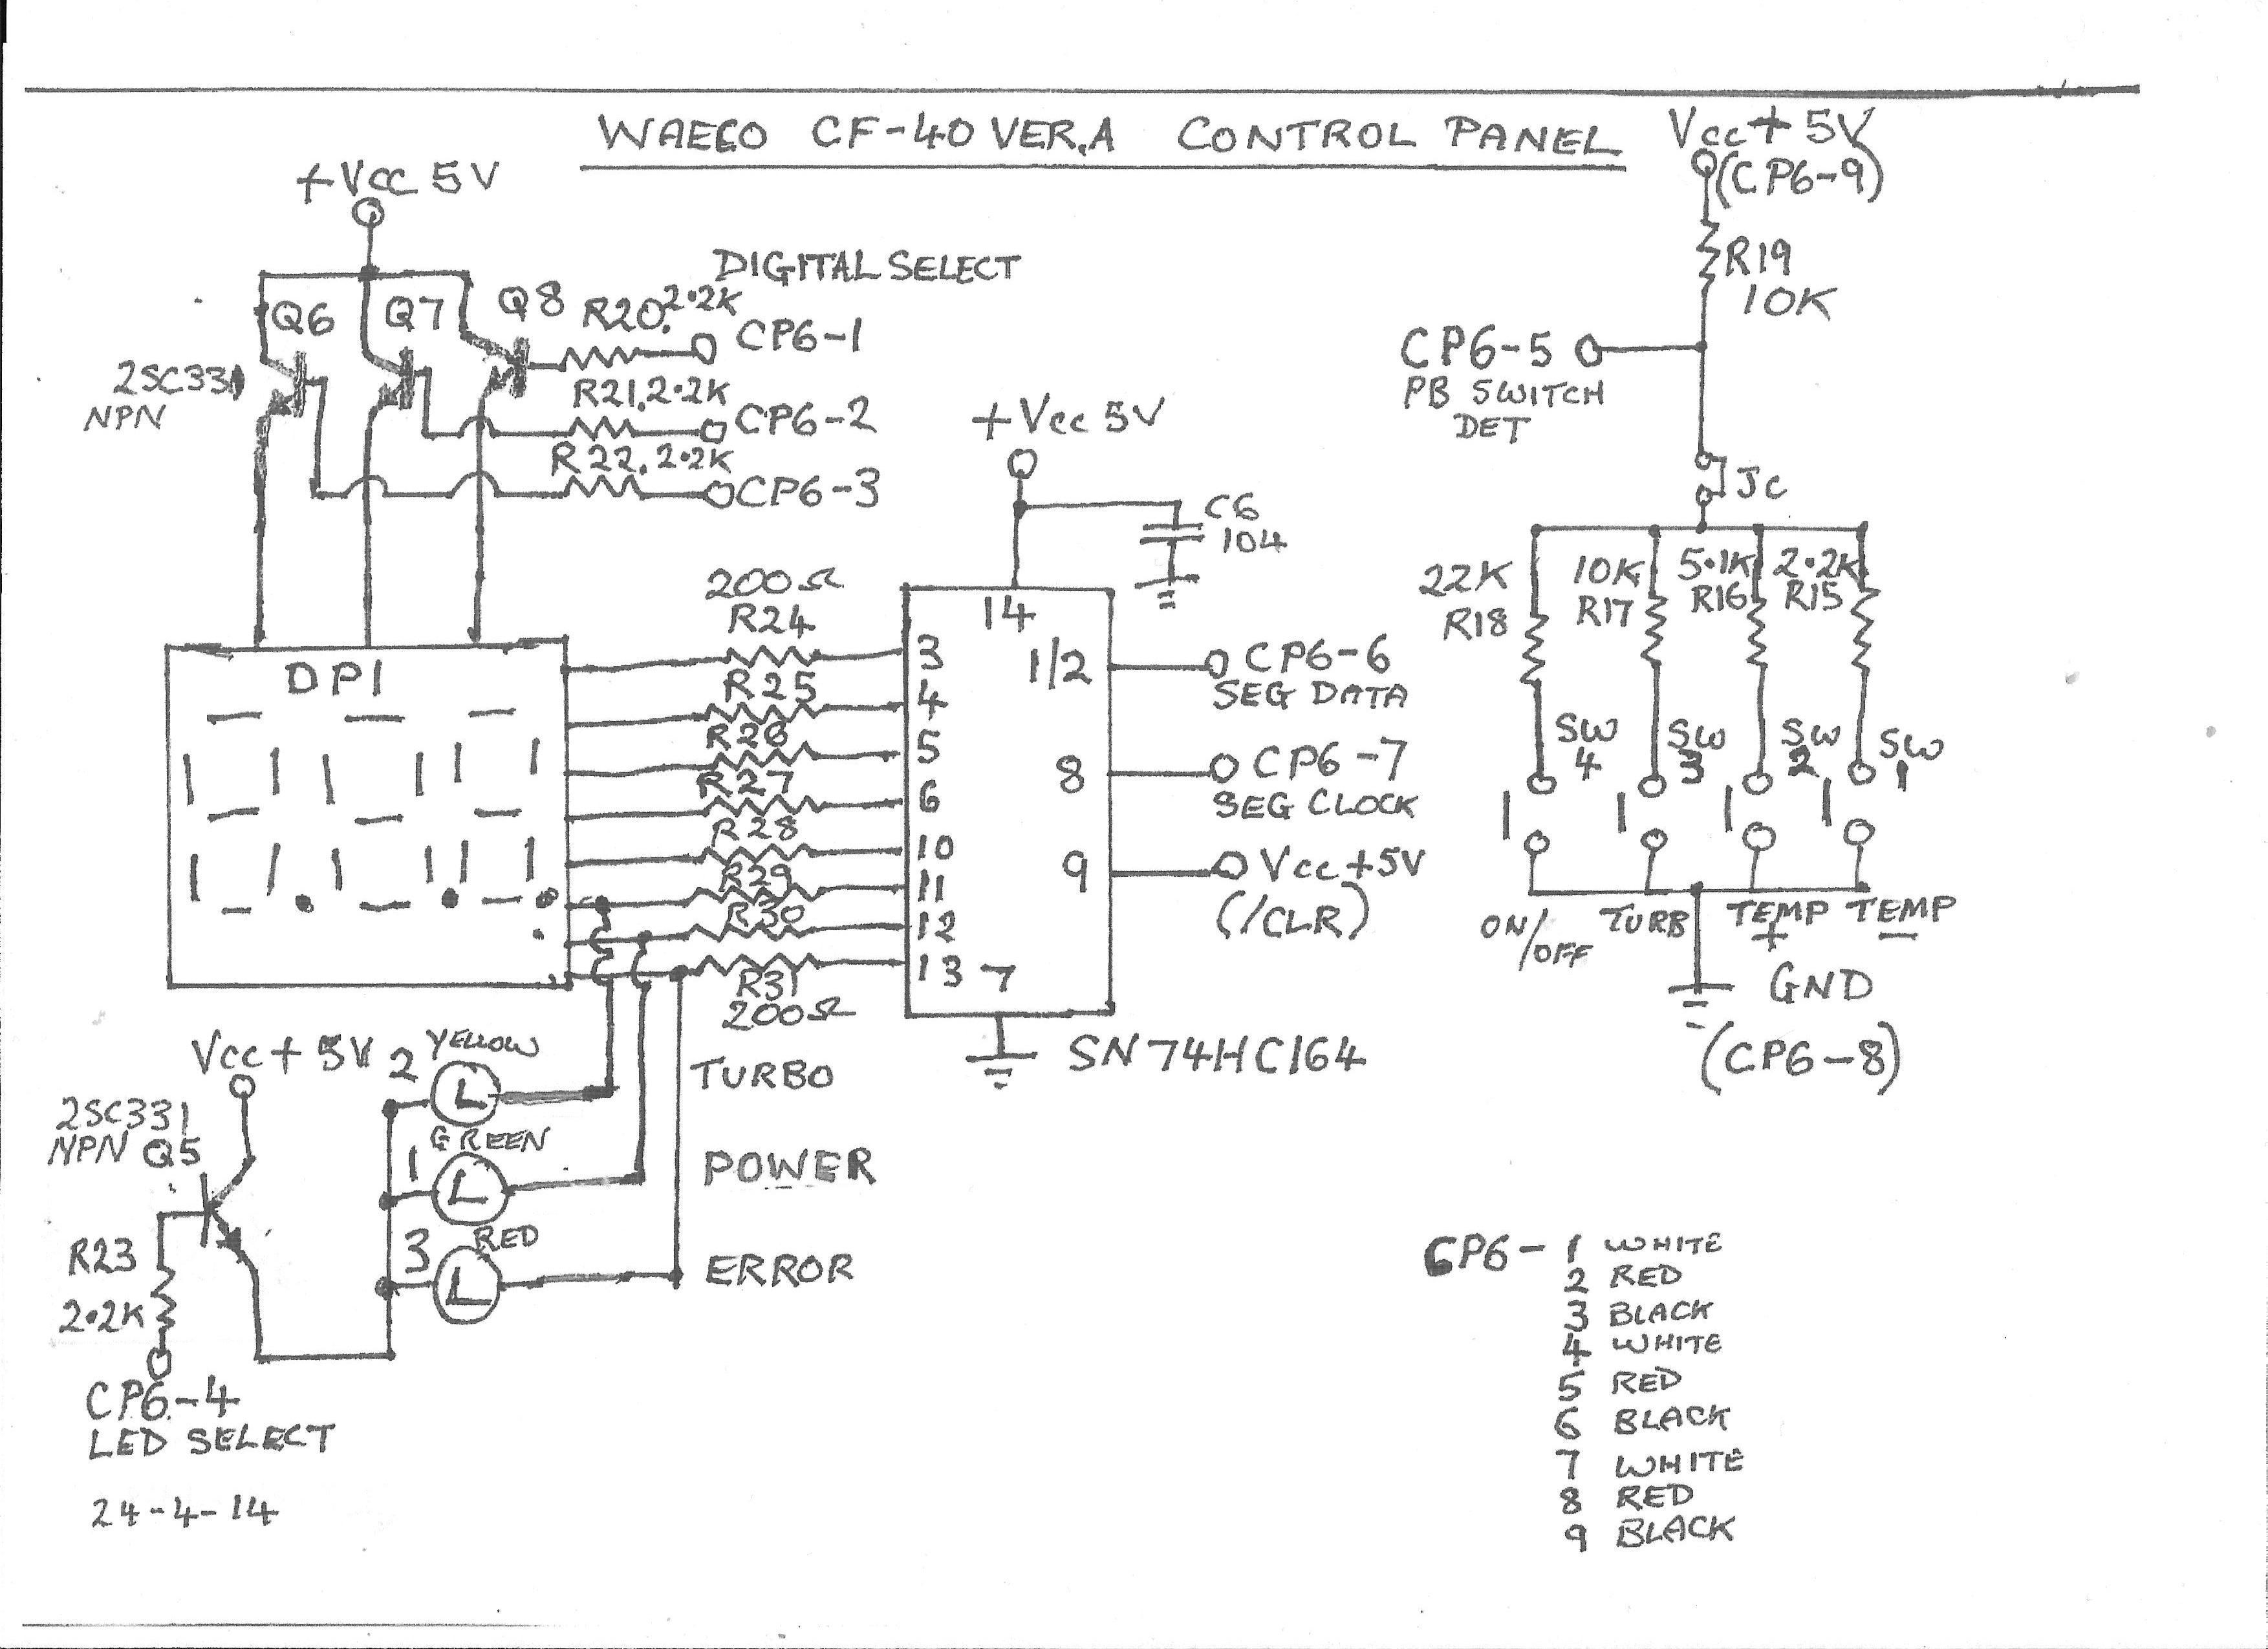 WAECO CF-40 Ver A control panel.jpg